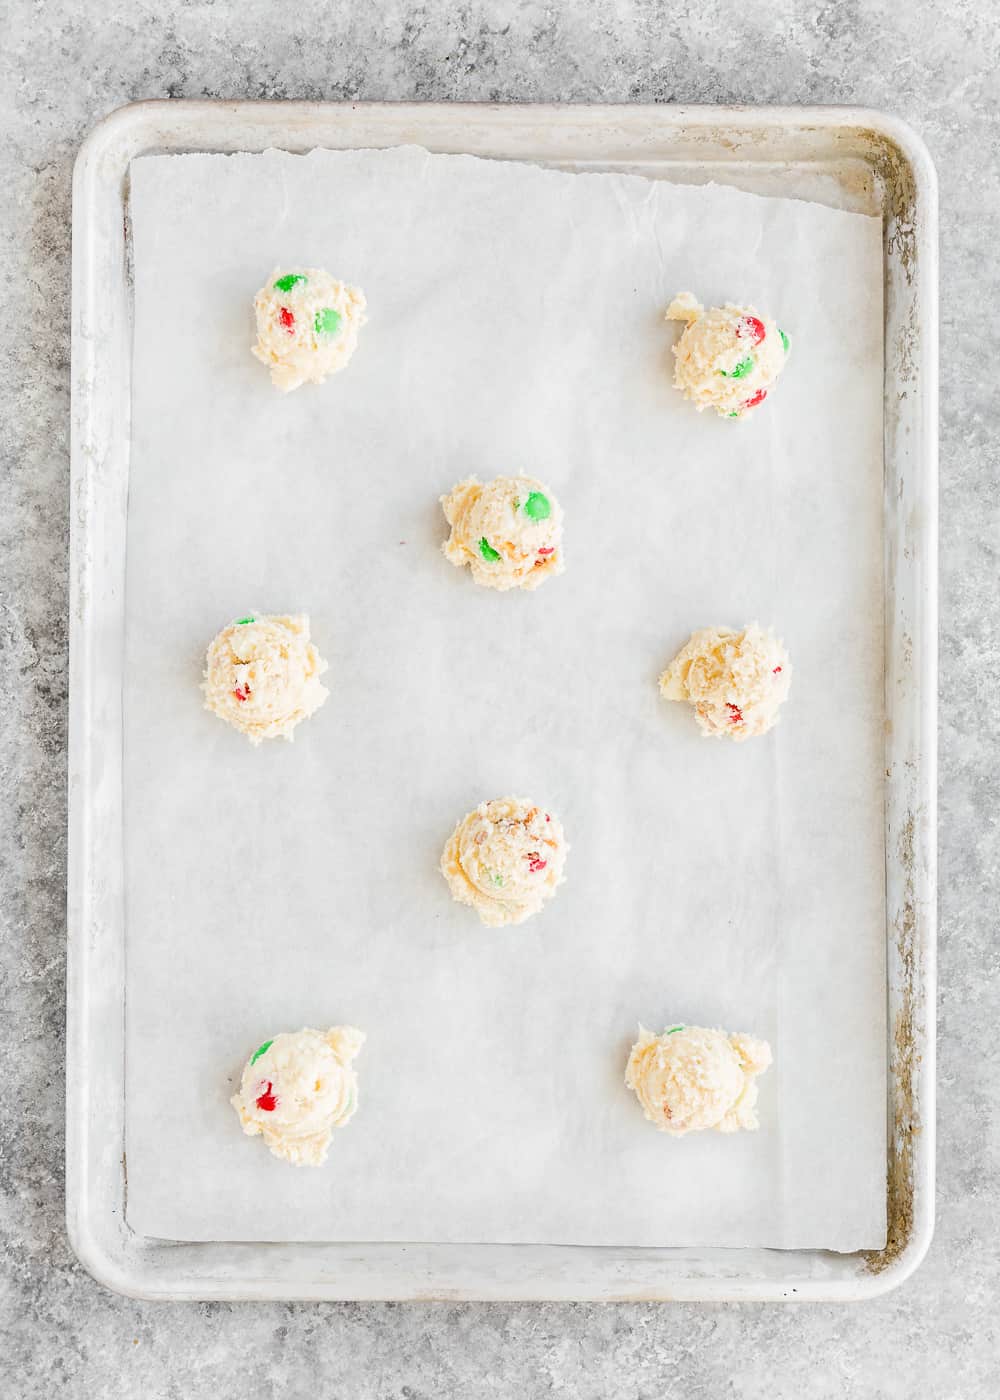 egg-free cookie dough balls on a baking sheet. 